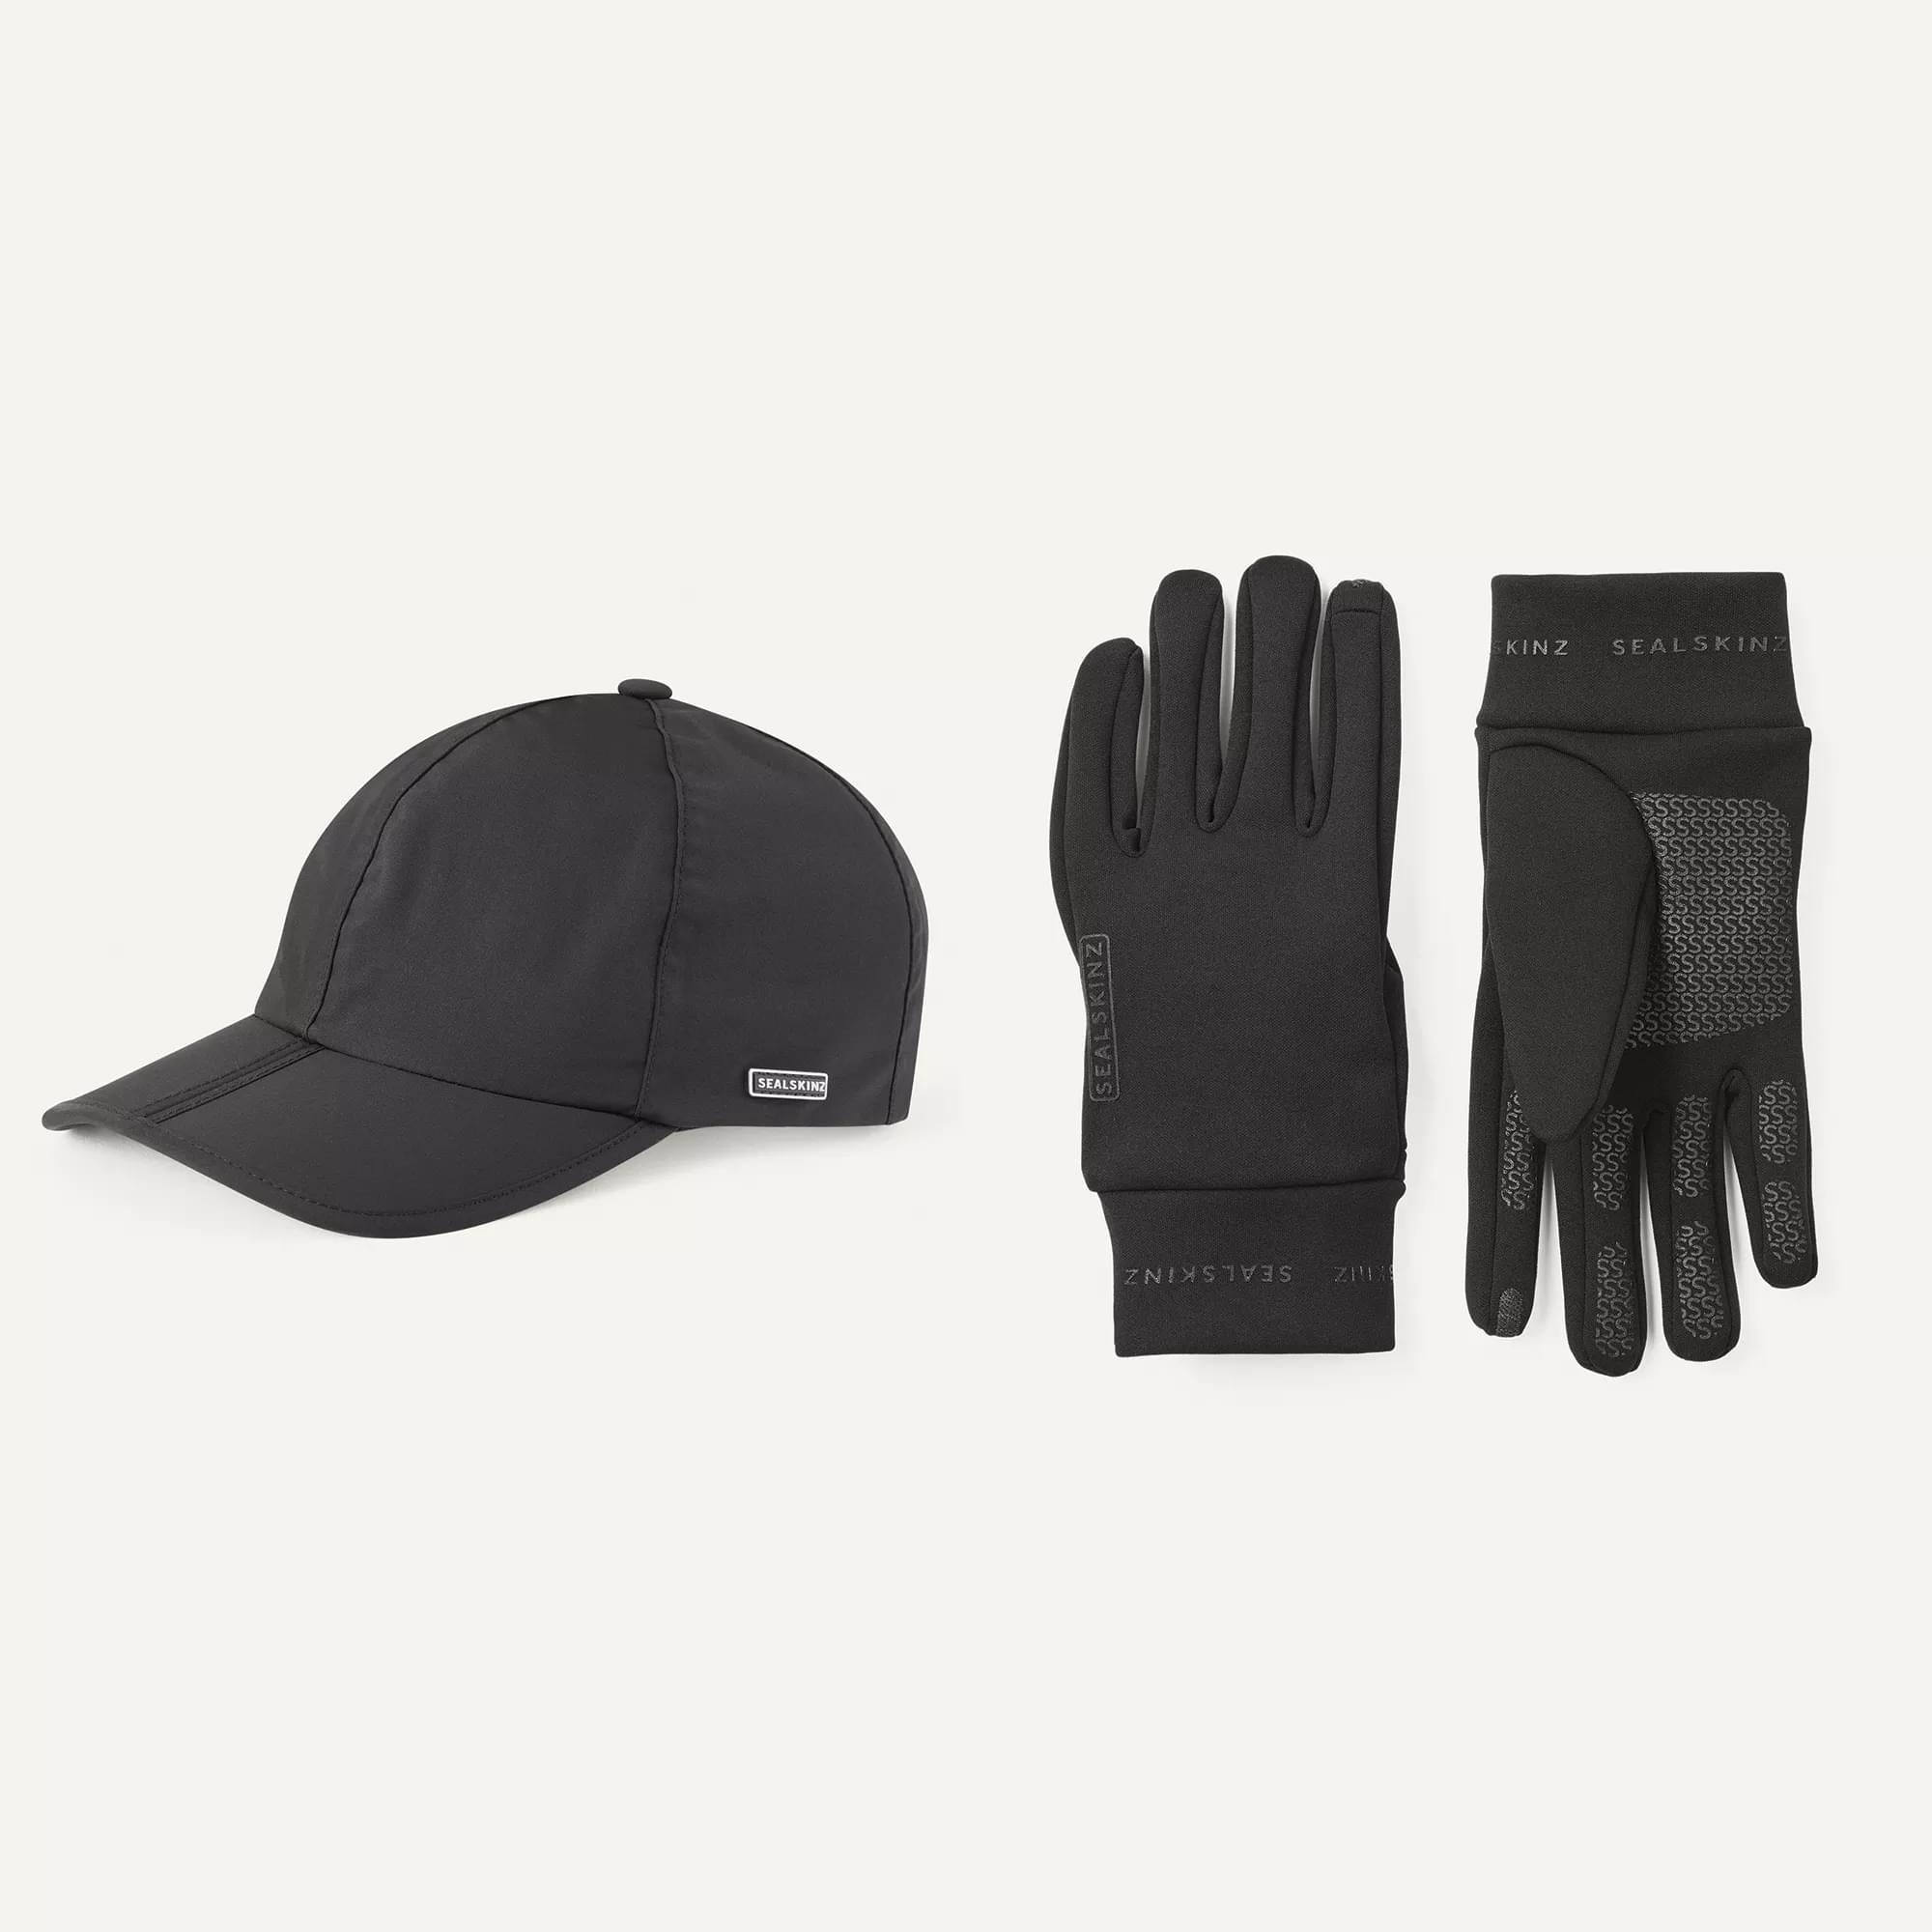 Glove &amp; Hat Gift Pack